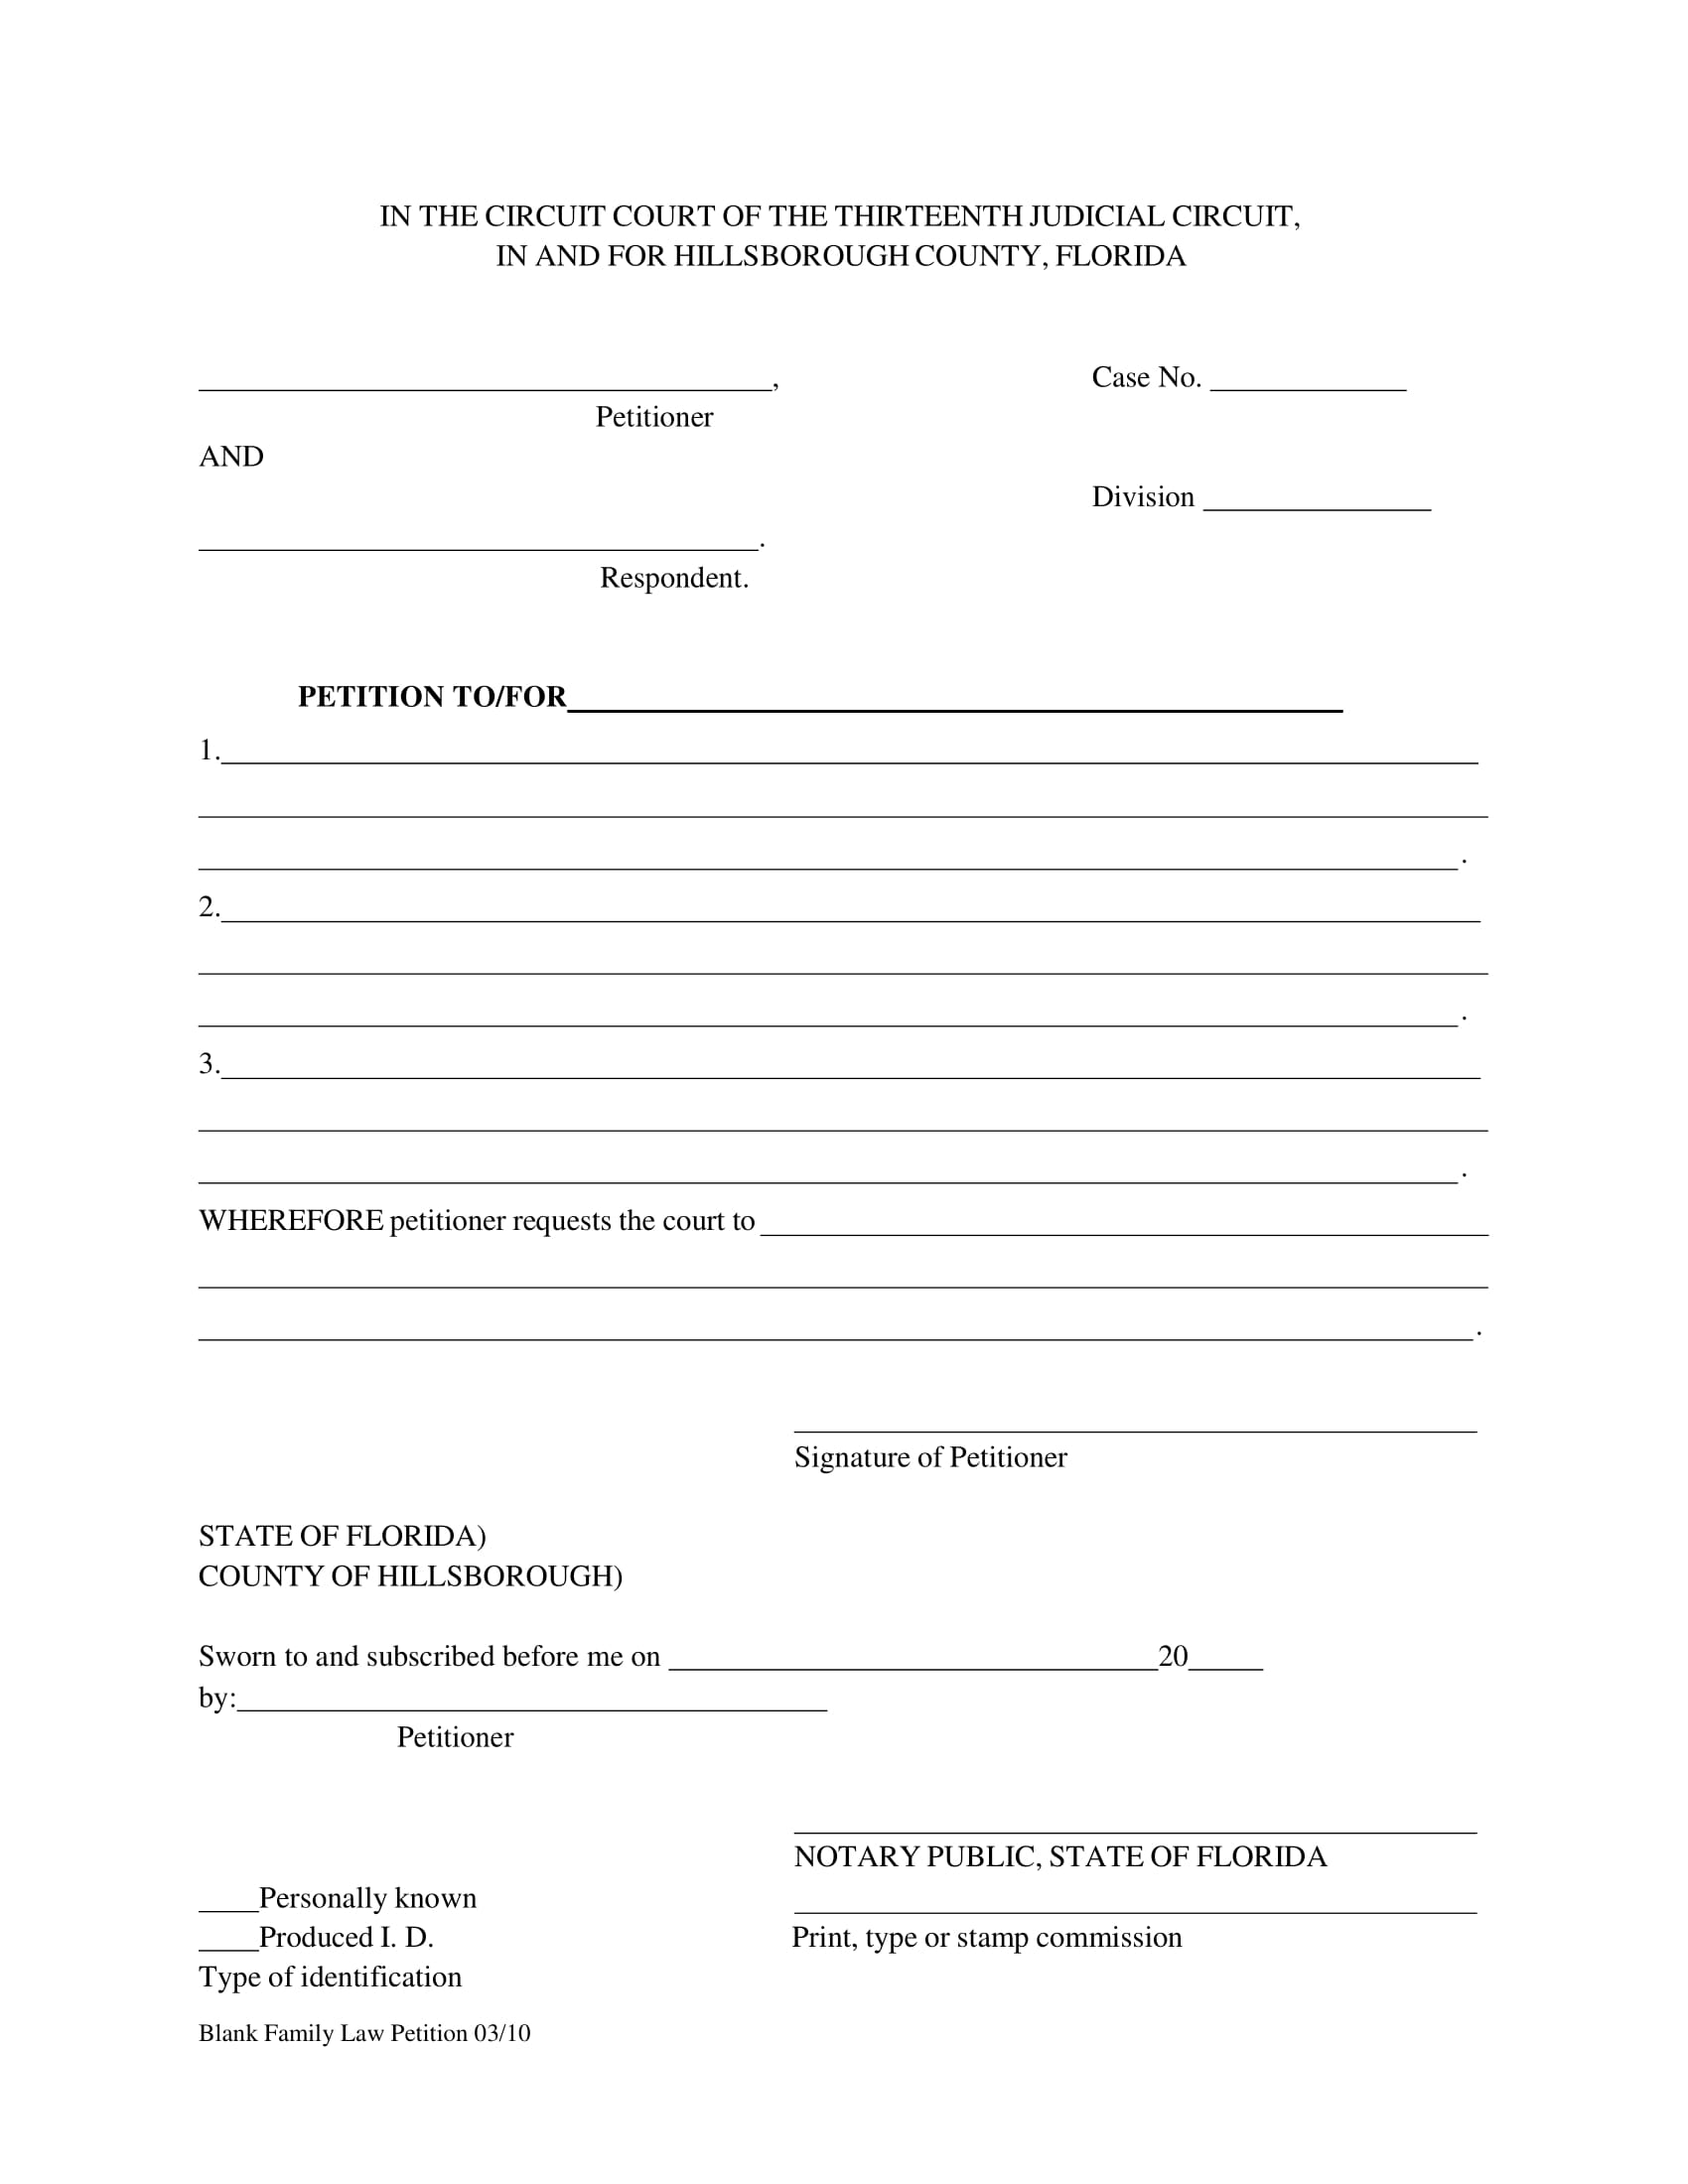 basic legal petition form 3